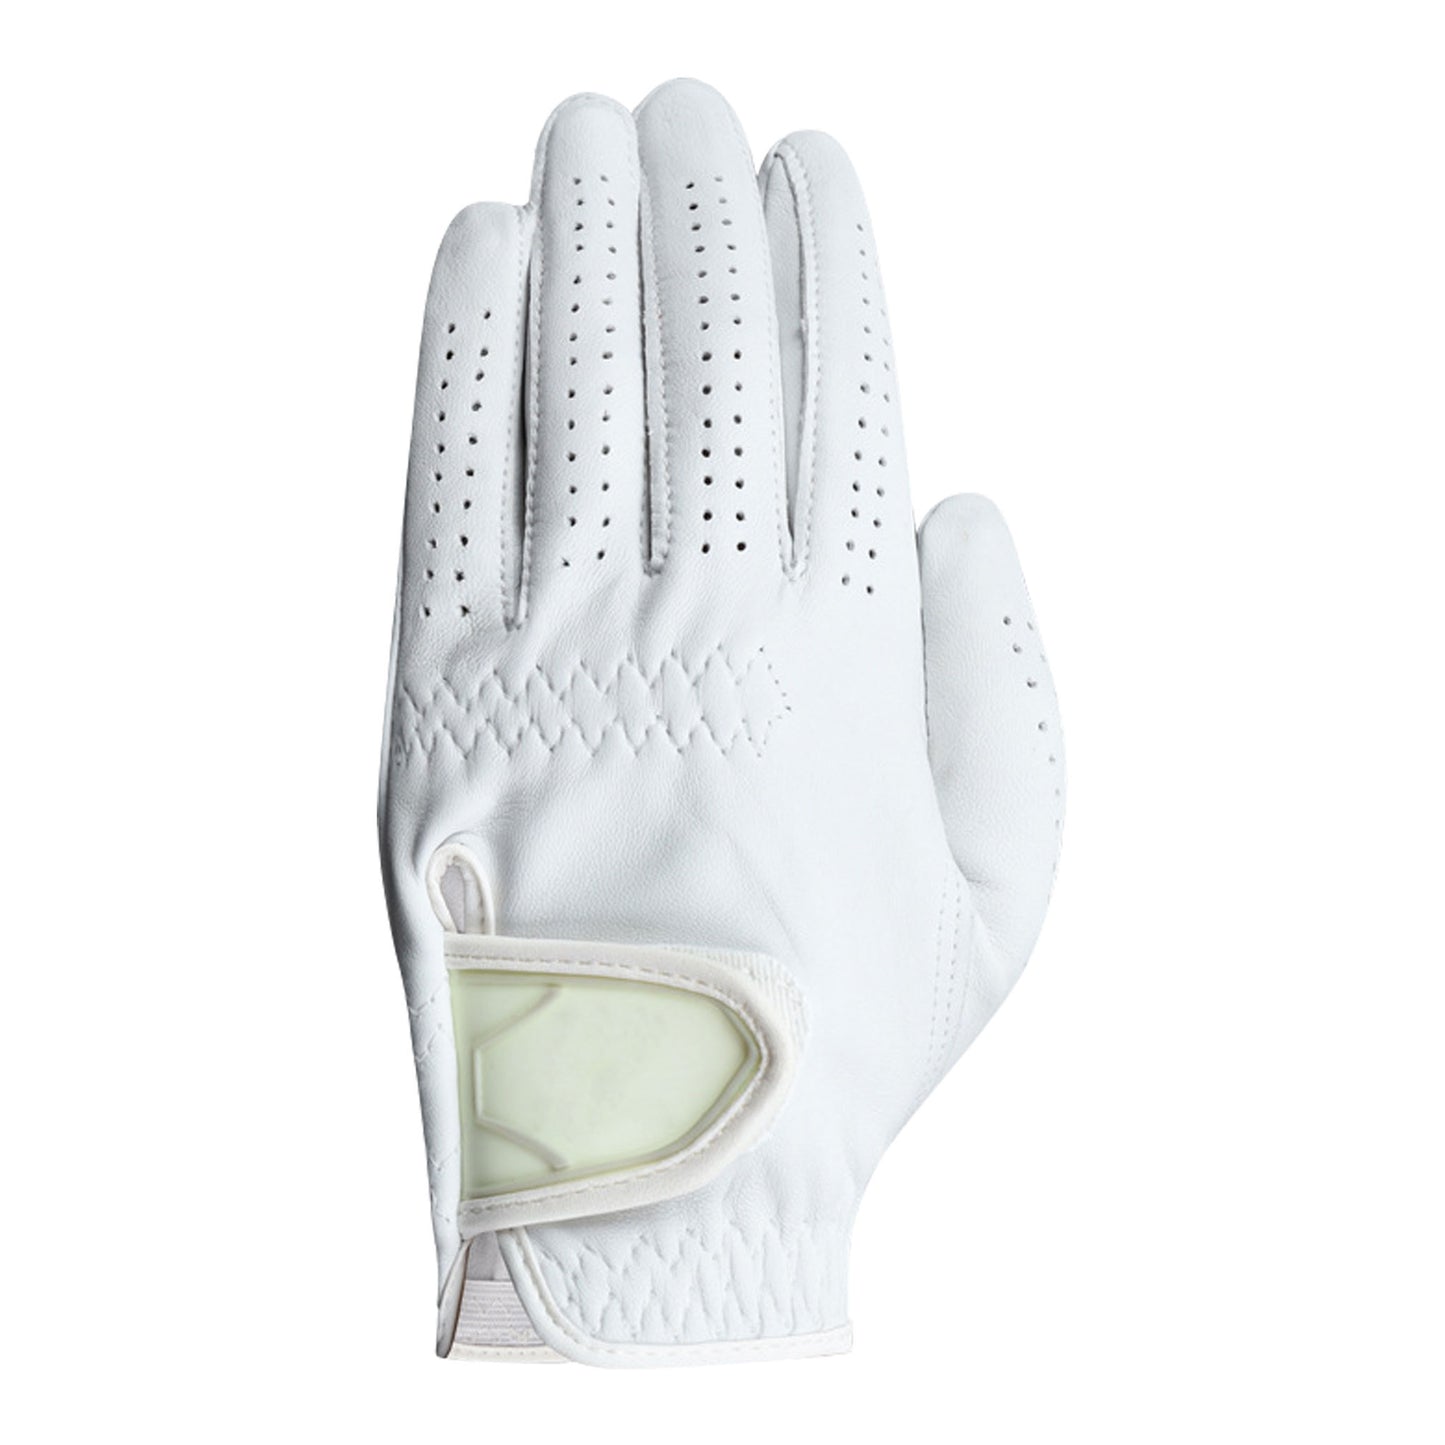 NOVAYAD 2 Pack Golf Glove White for Women，Durable Breathable